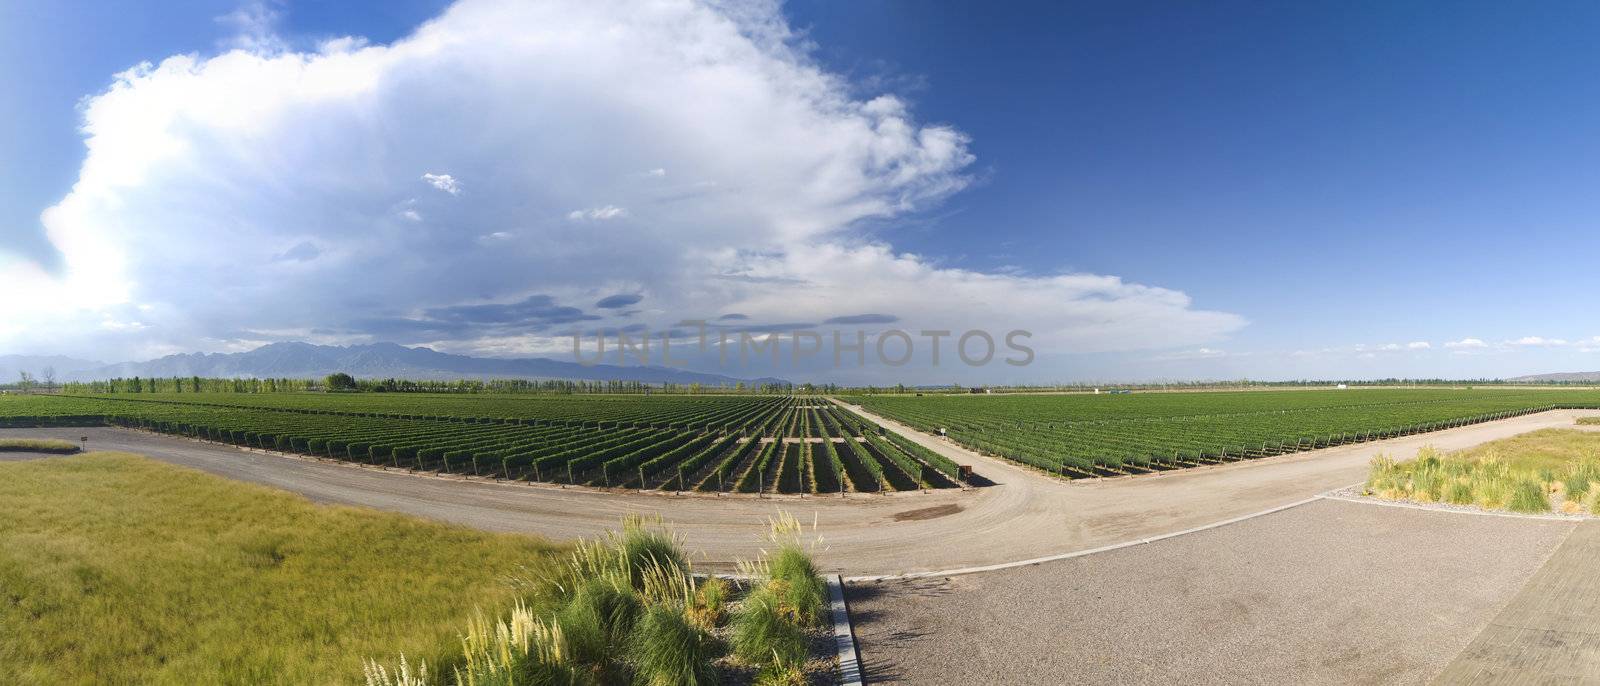 Panorama of a large vineyard  in Mendoza, Argentina.